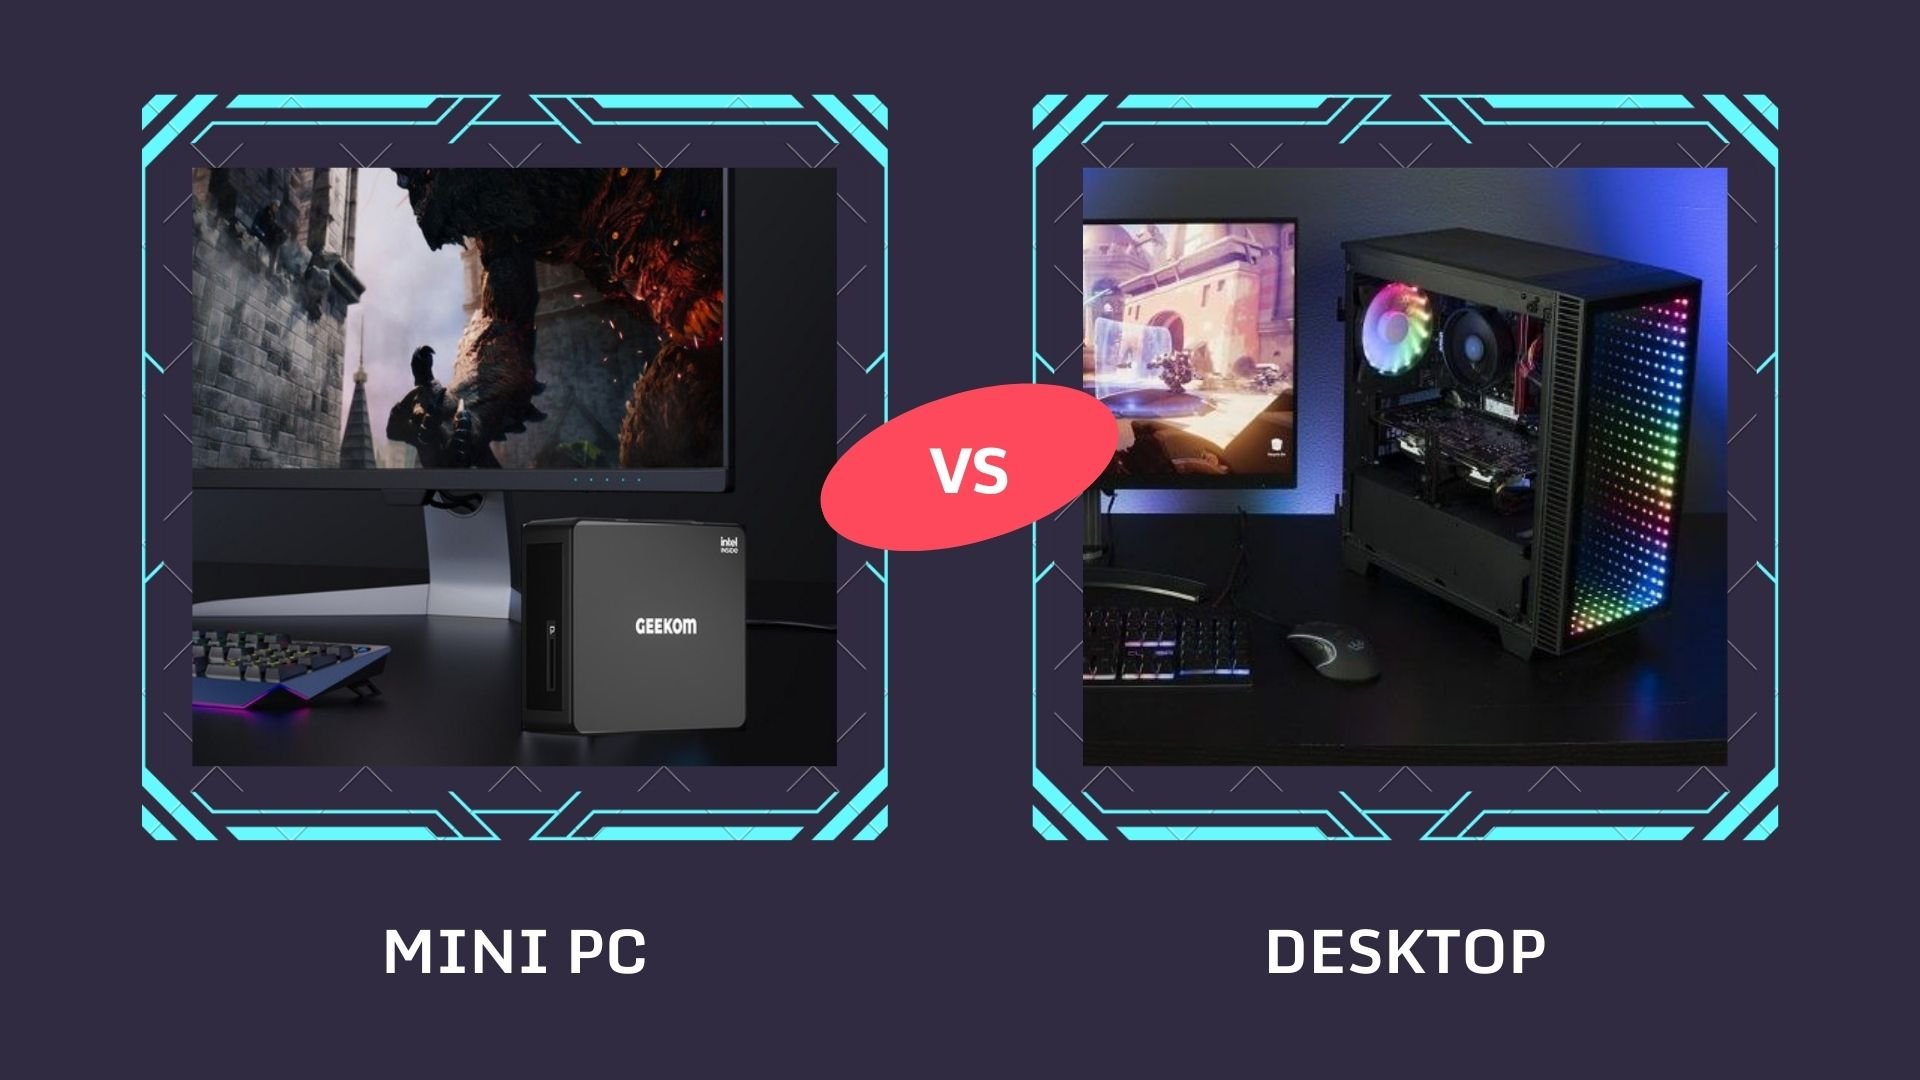 Mini PC vs Desktop